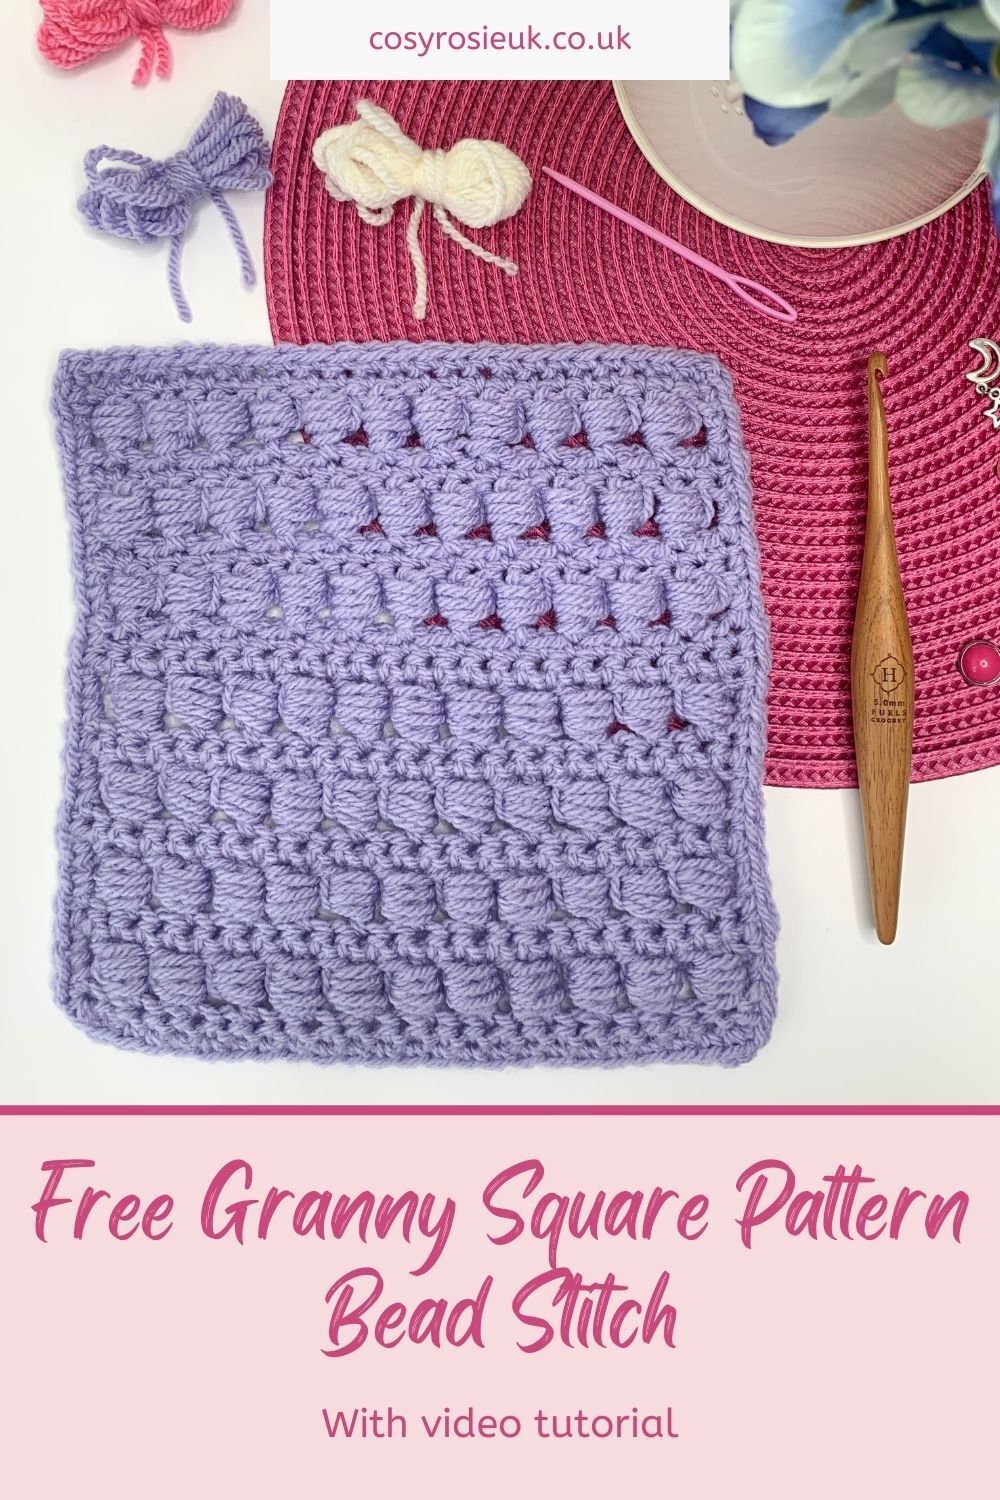 Bead Stitch Granny square pattern